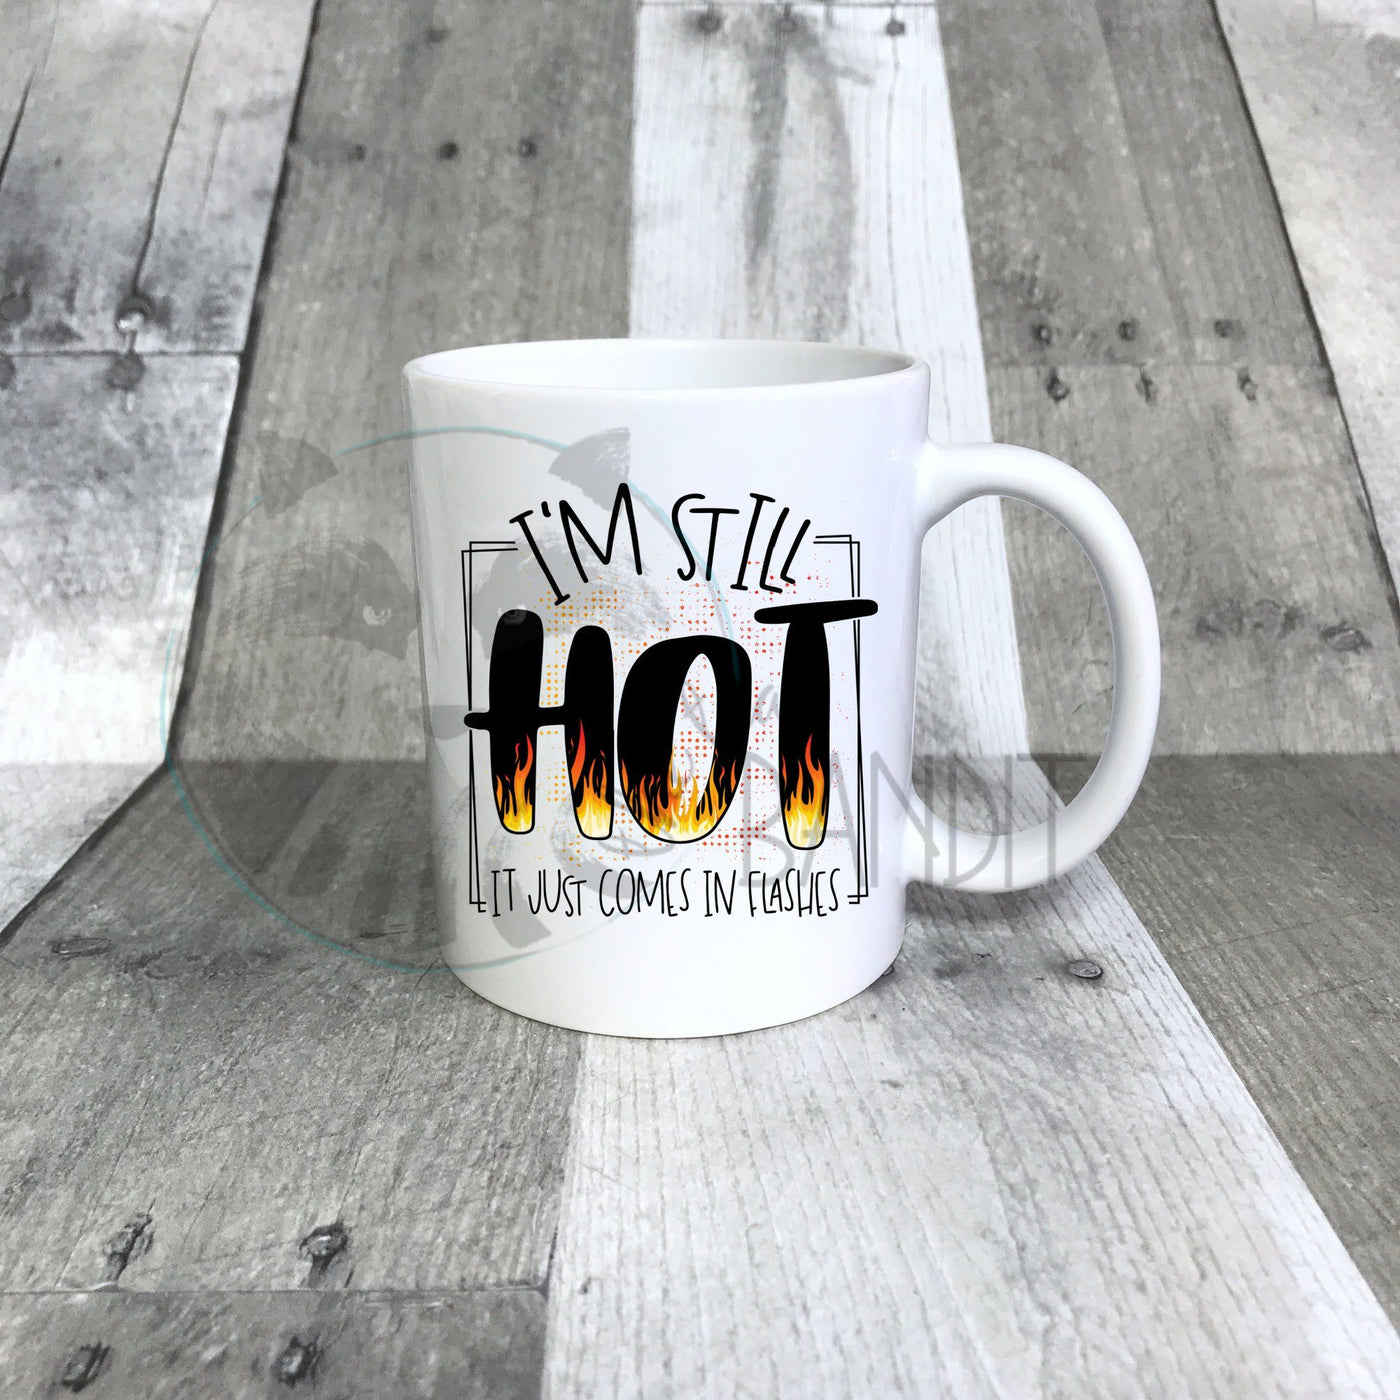 Still Hot mug mug The Teal Bandit 